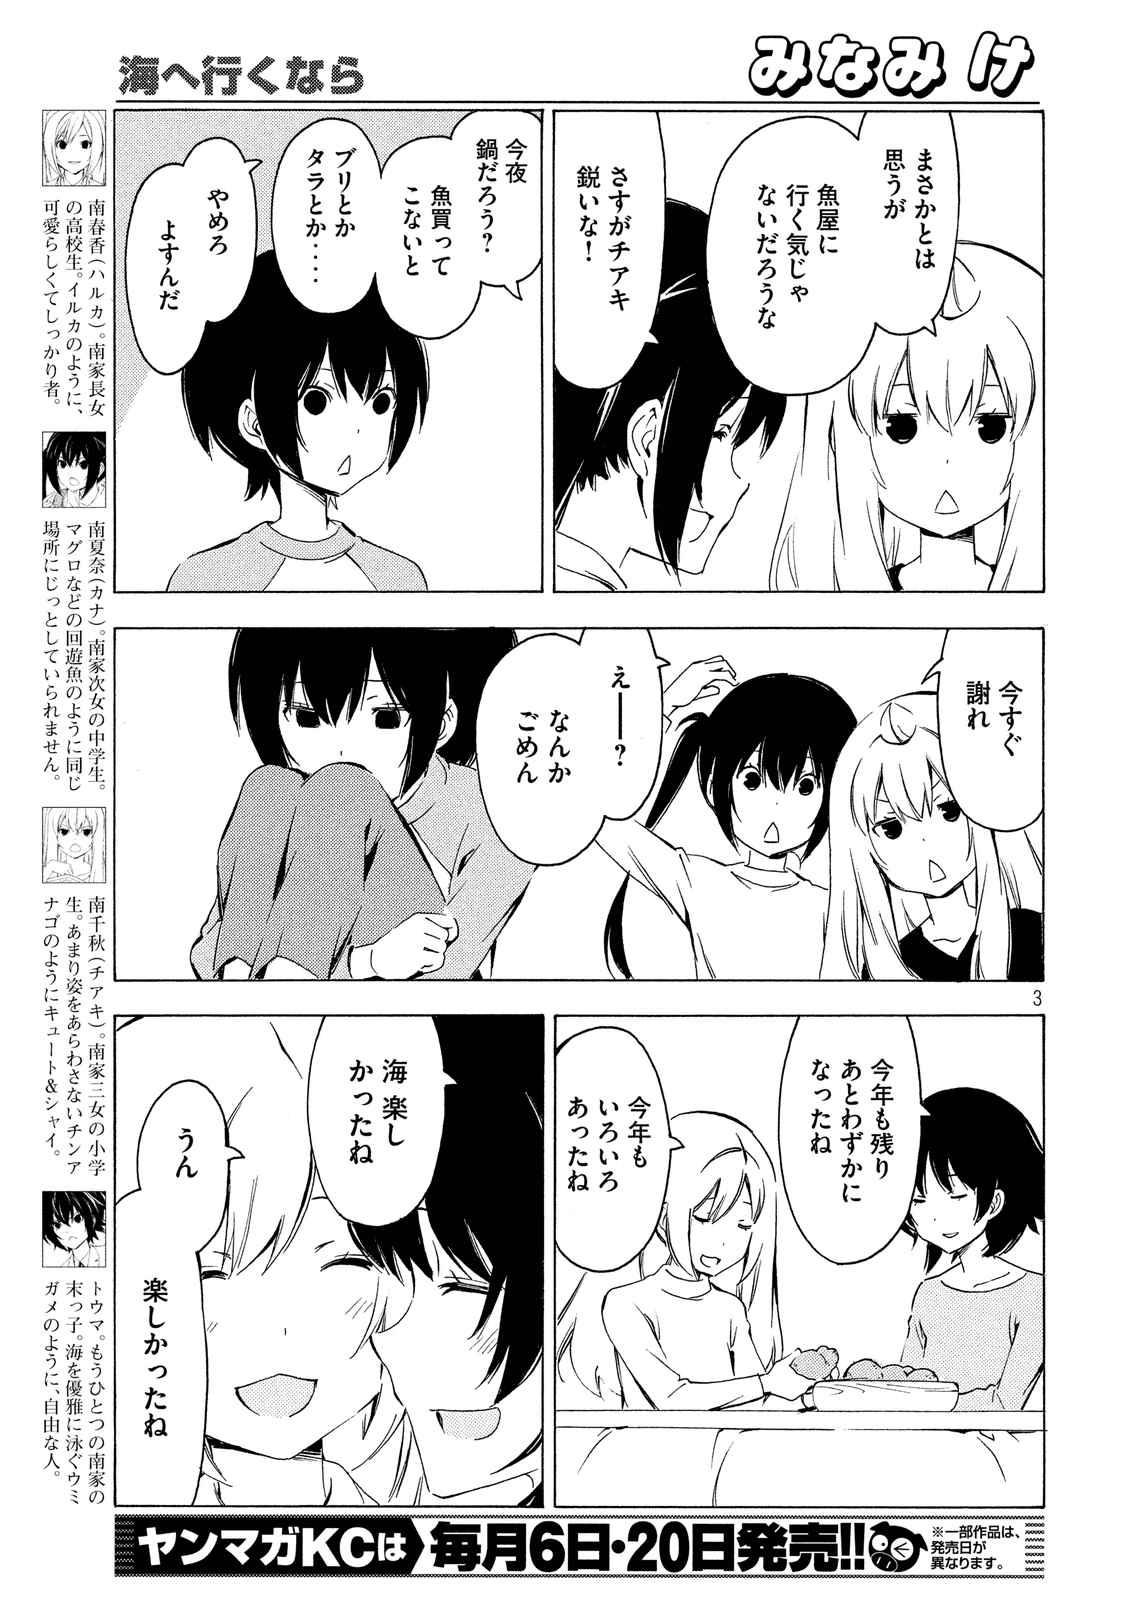 Minami-ke - Chapter 306 - Page 3